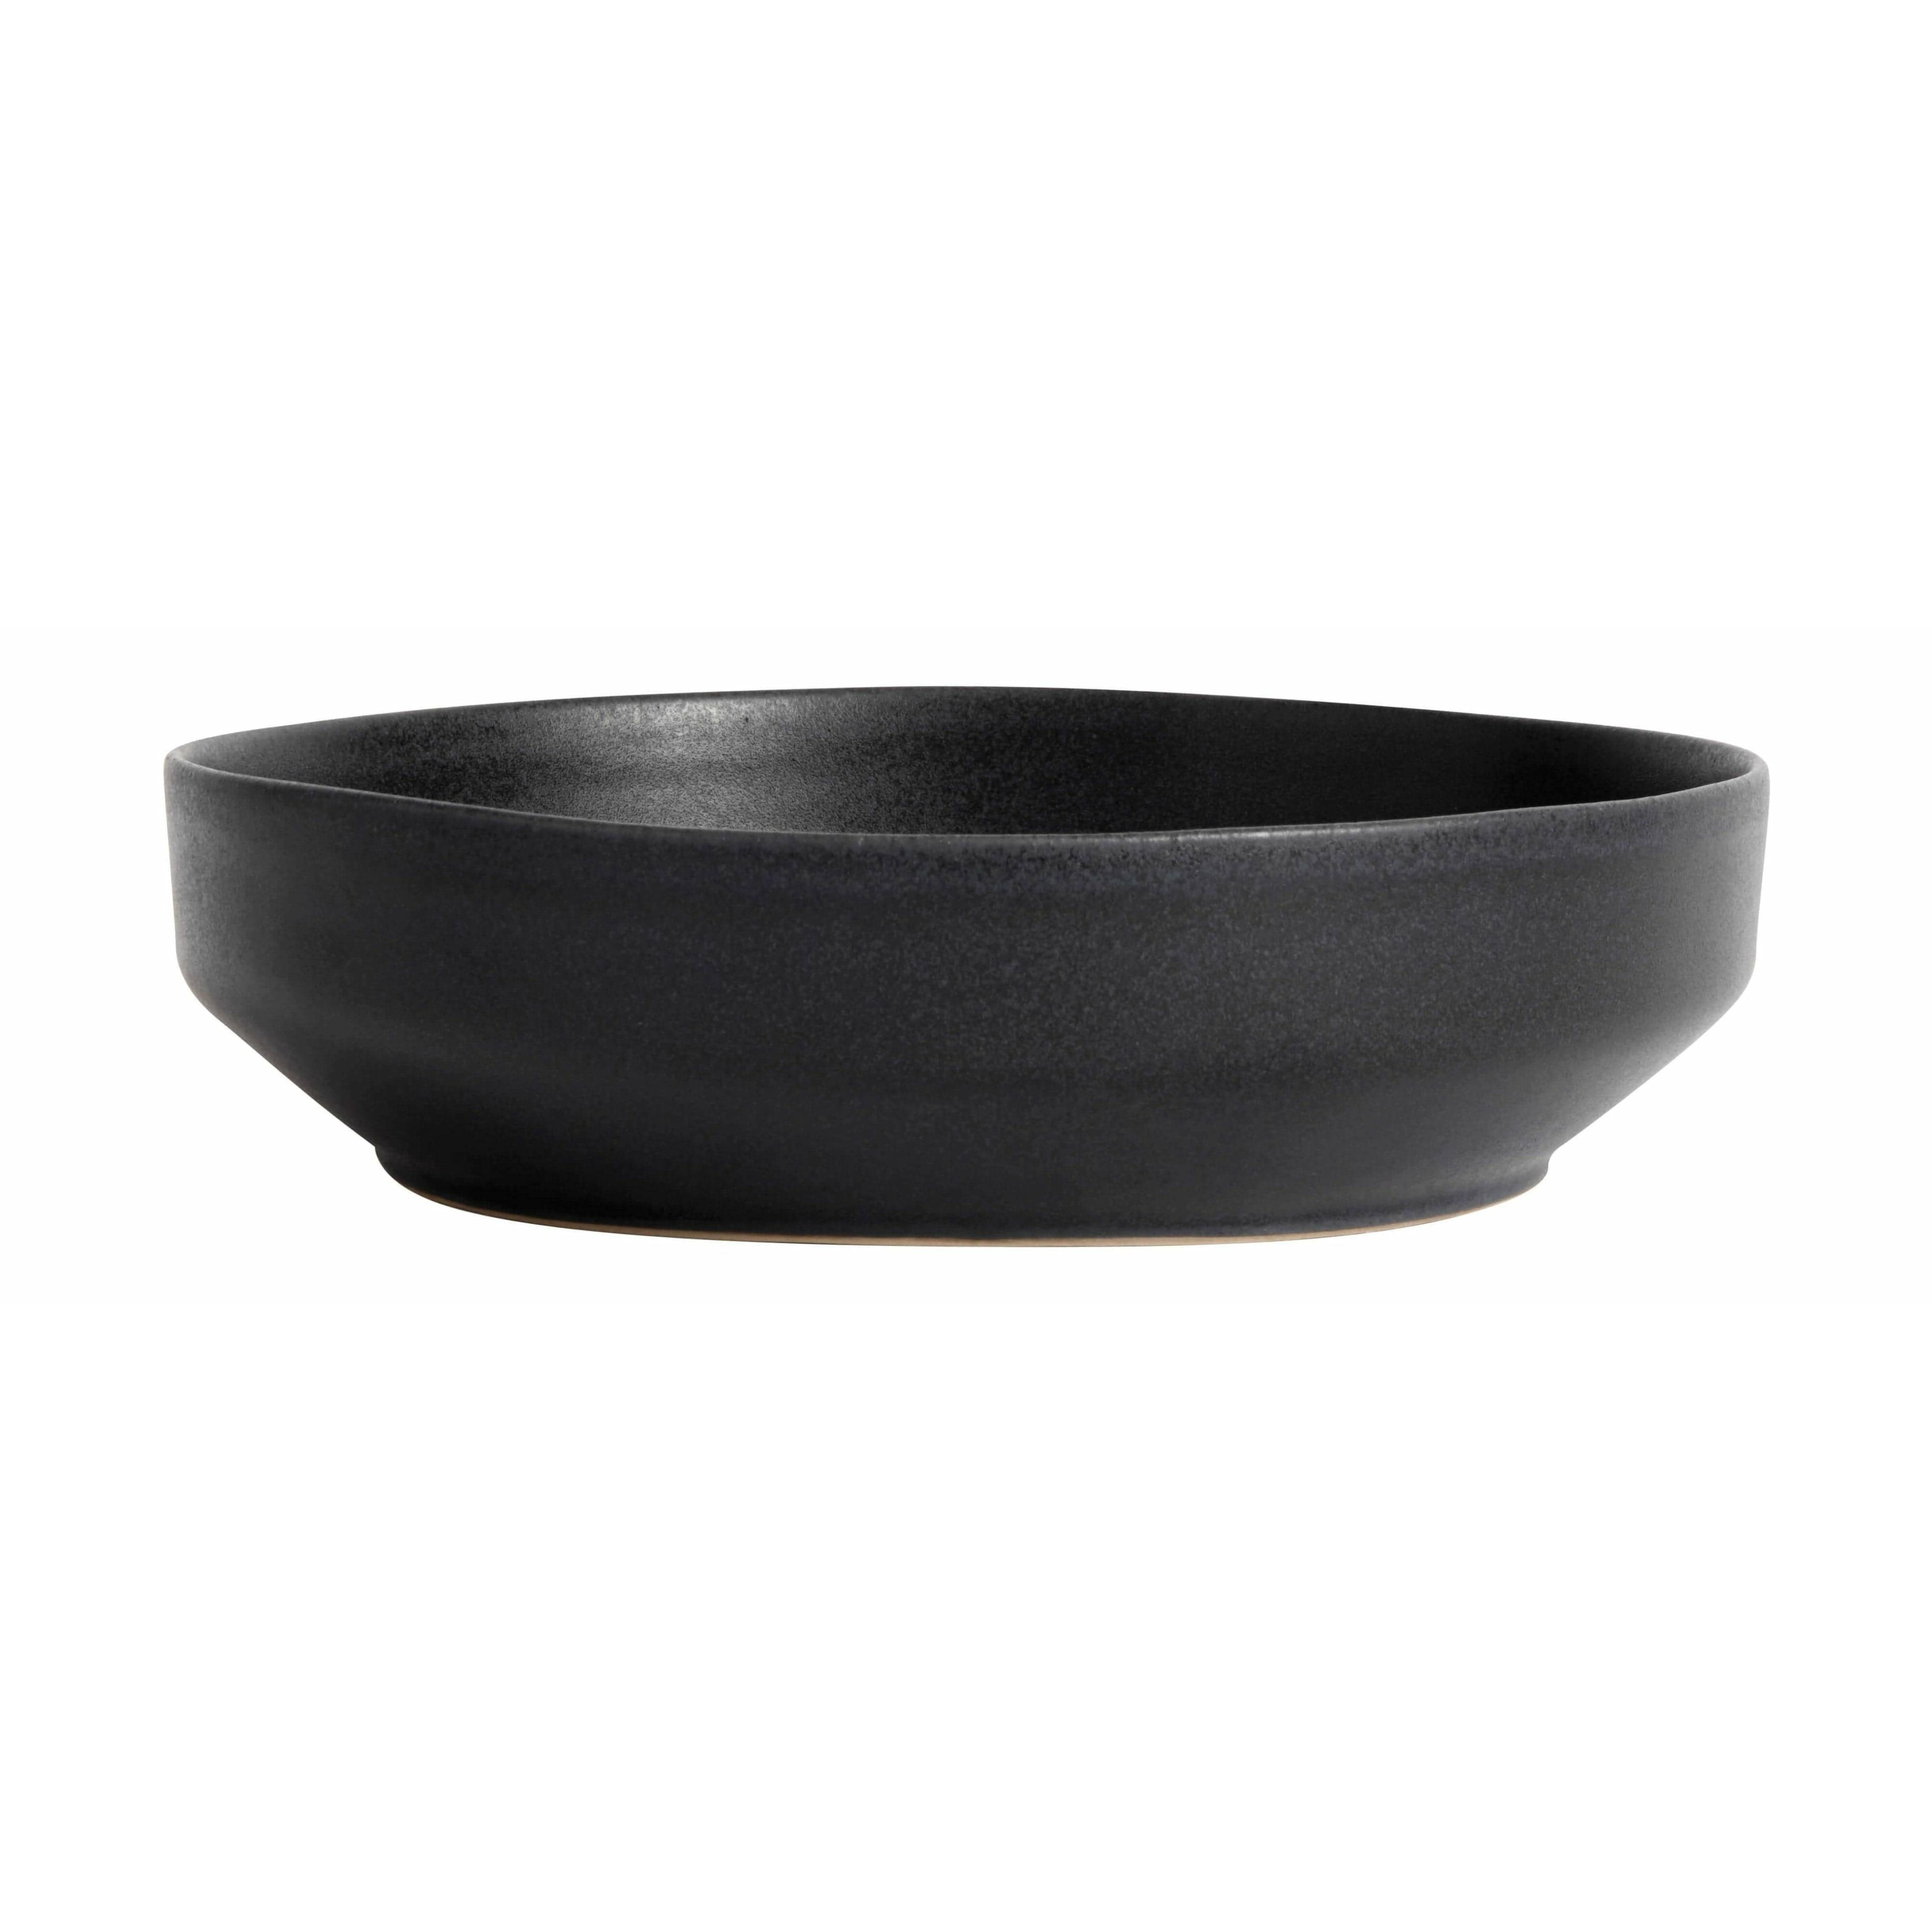 Muubs Ceto Serving Bowl Black, 22 cm